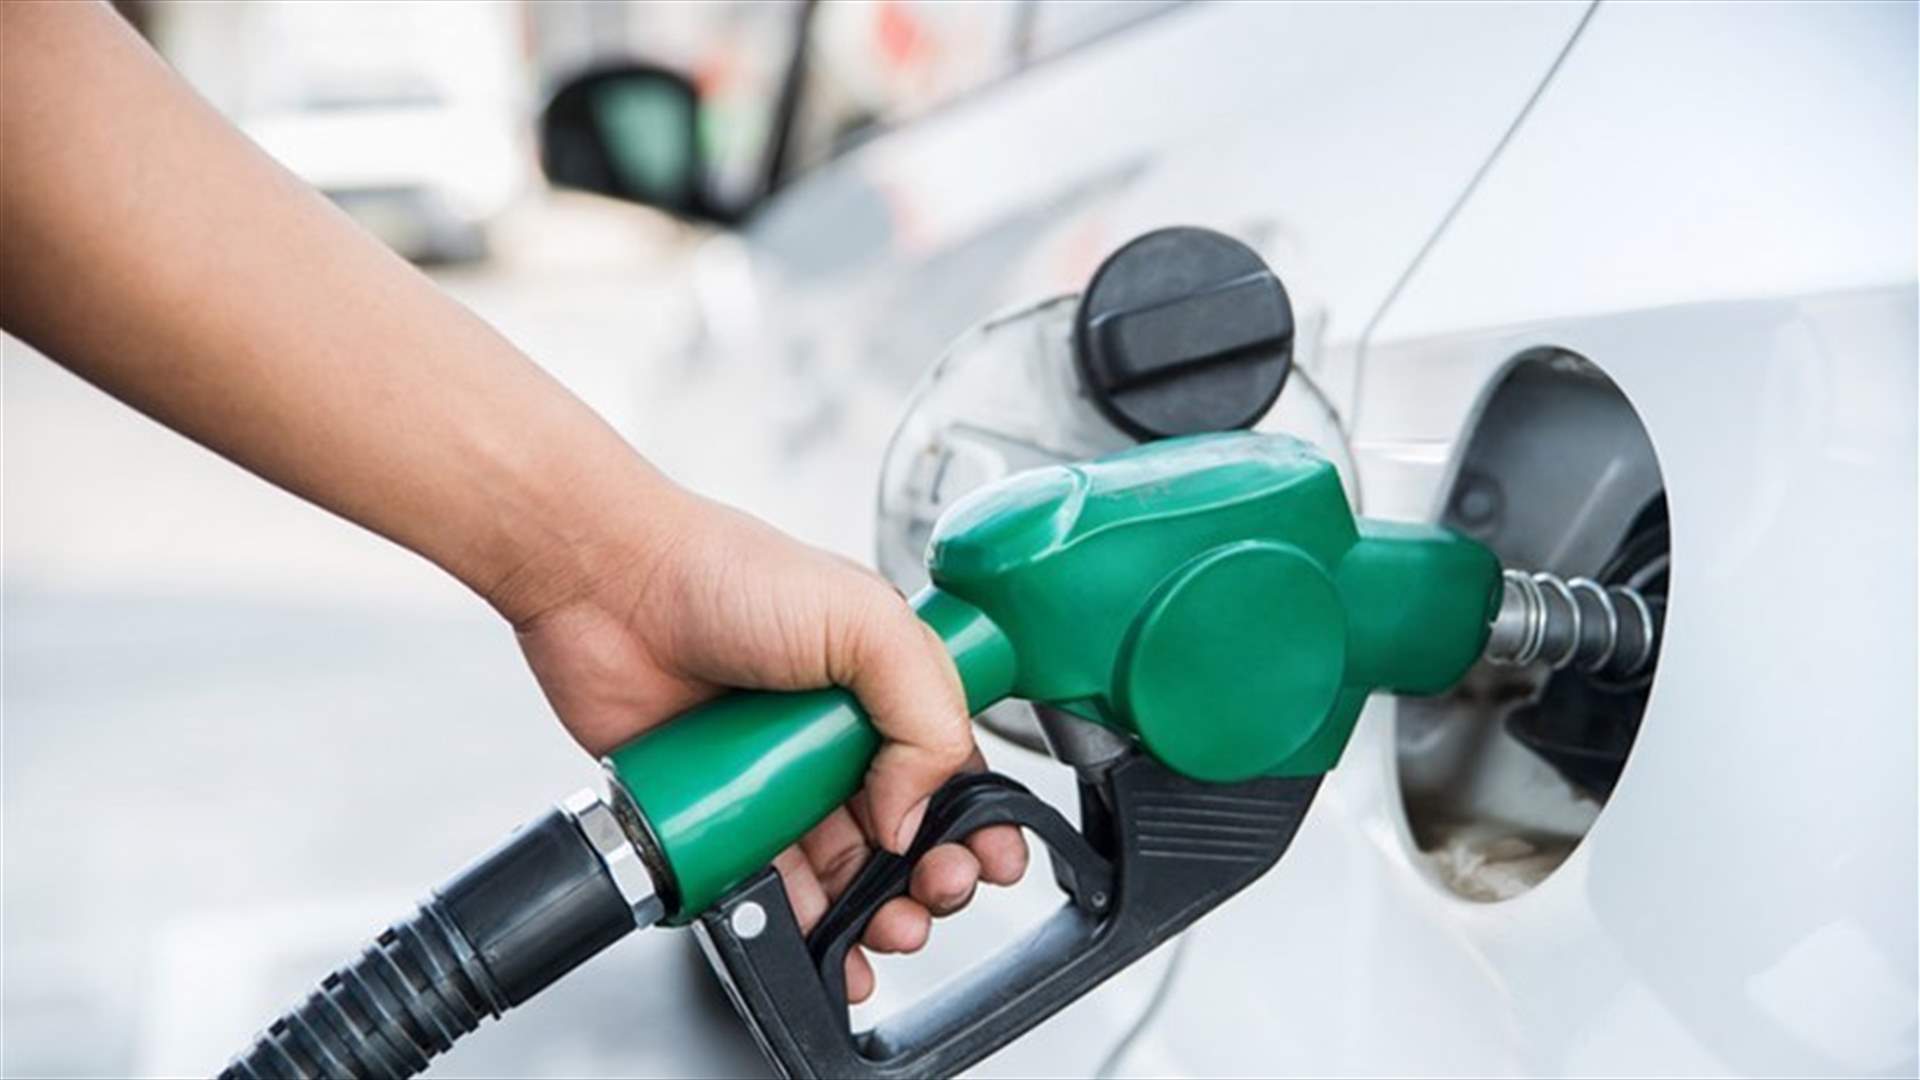 Fuel prices increase across Lebanon